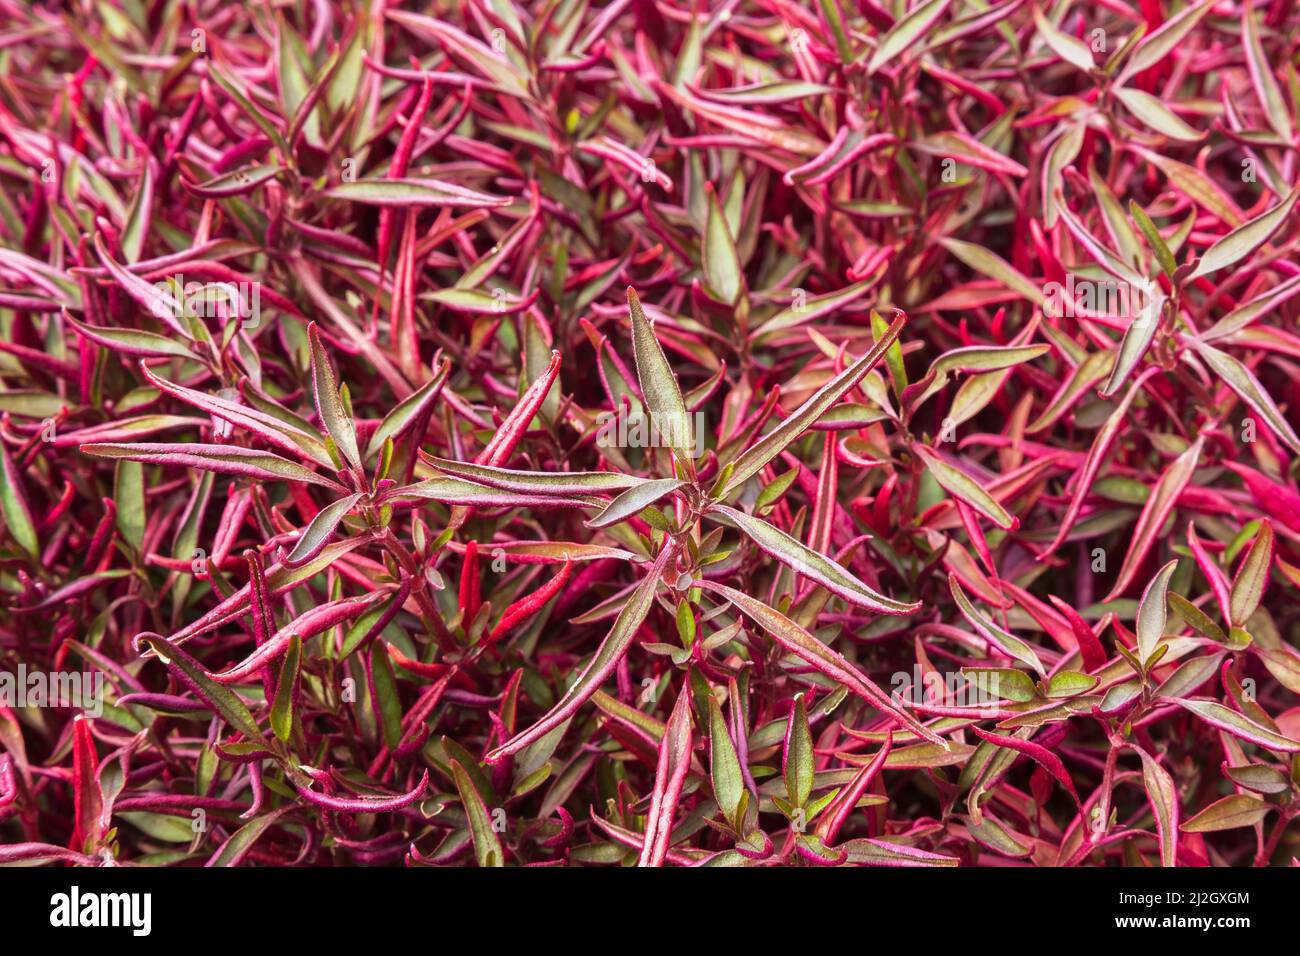 Alternanthera ficoidea 'Red Threads' - Joseph's Coat growing inside commercial nursery. Stock Photo